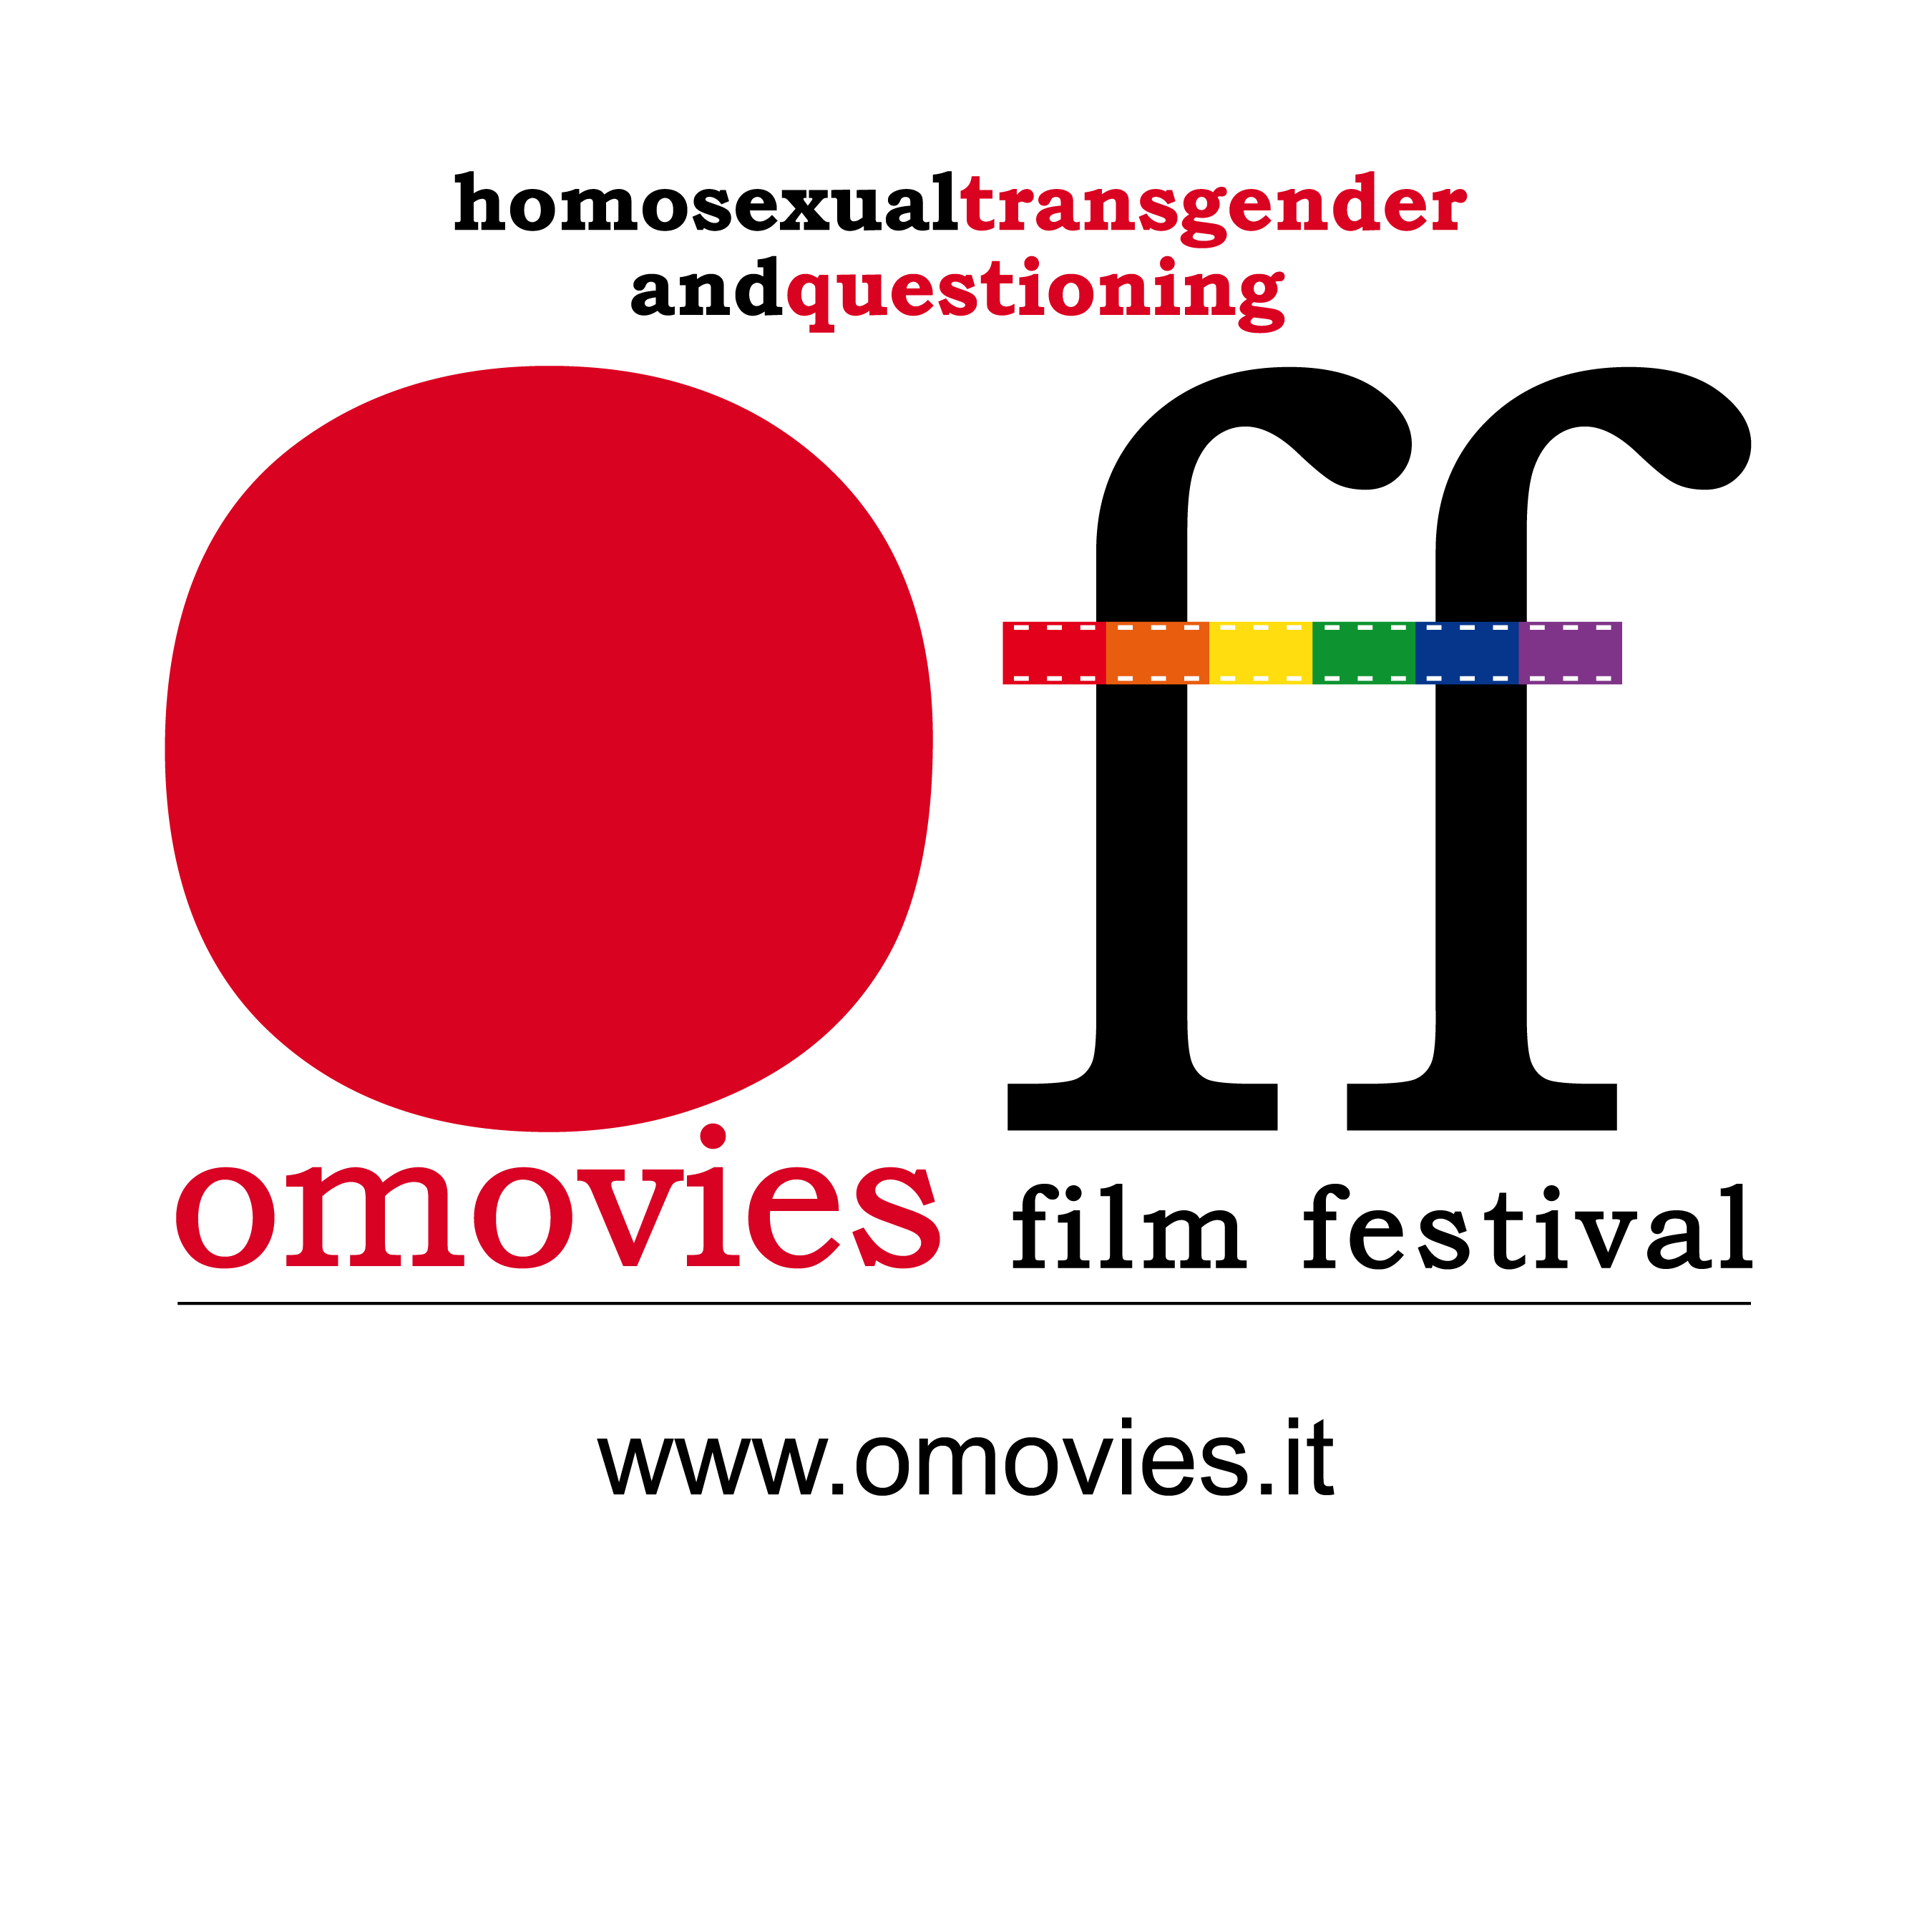 Omovies Film Festival www.omovies.it